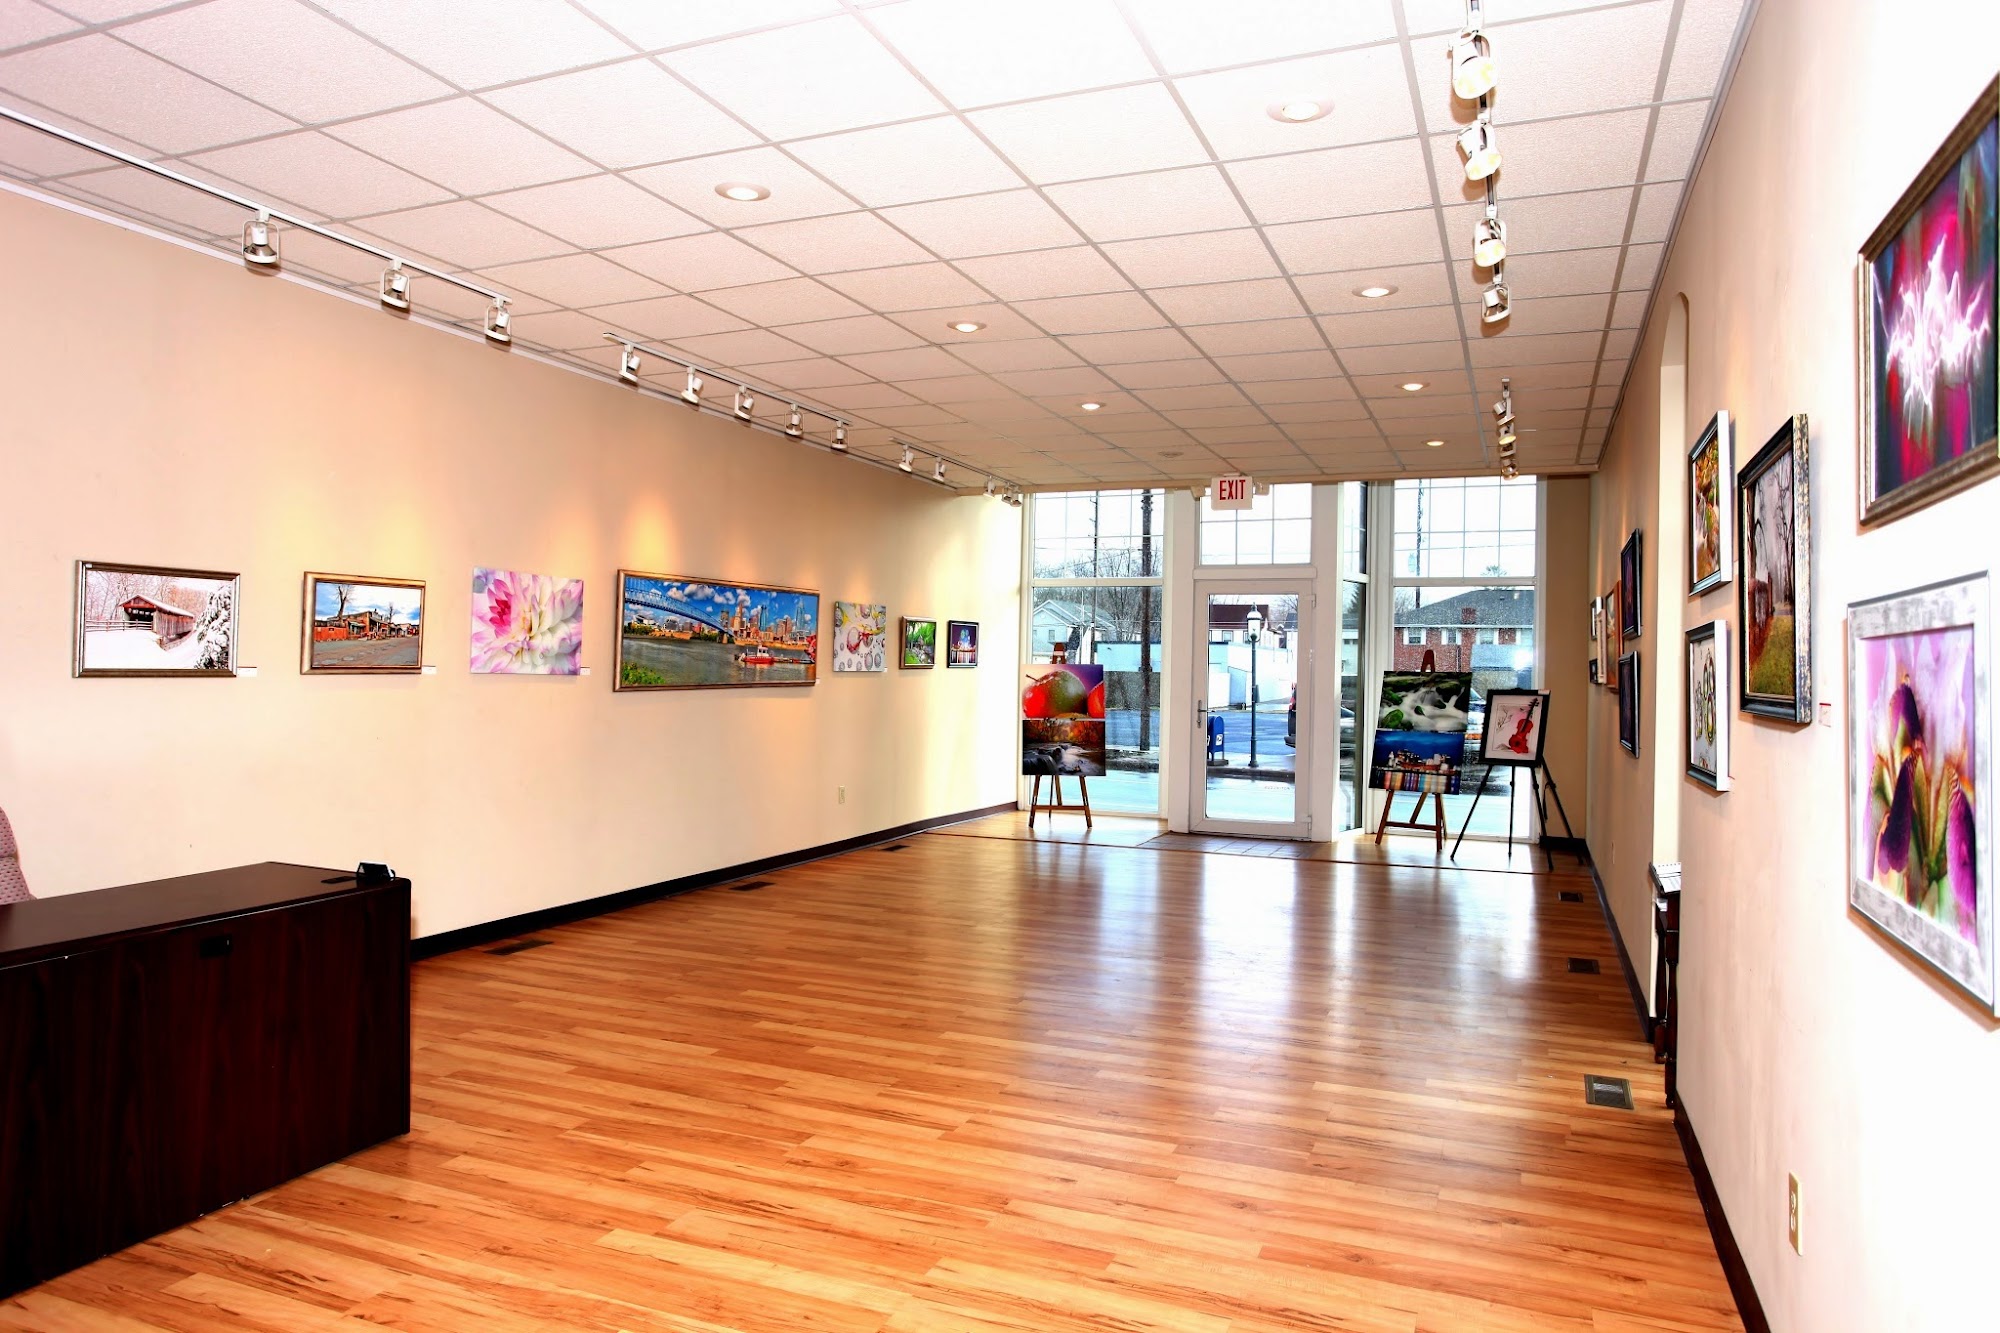 Sharonville Cultural Arts Center